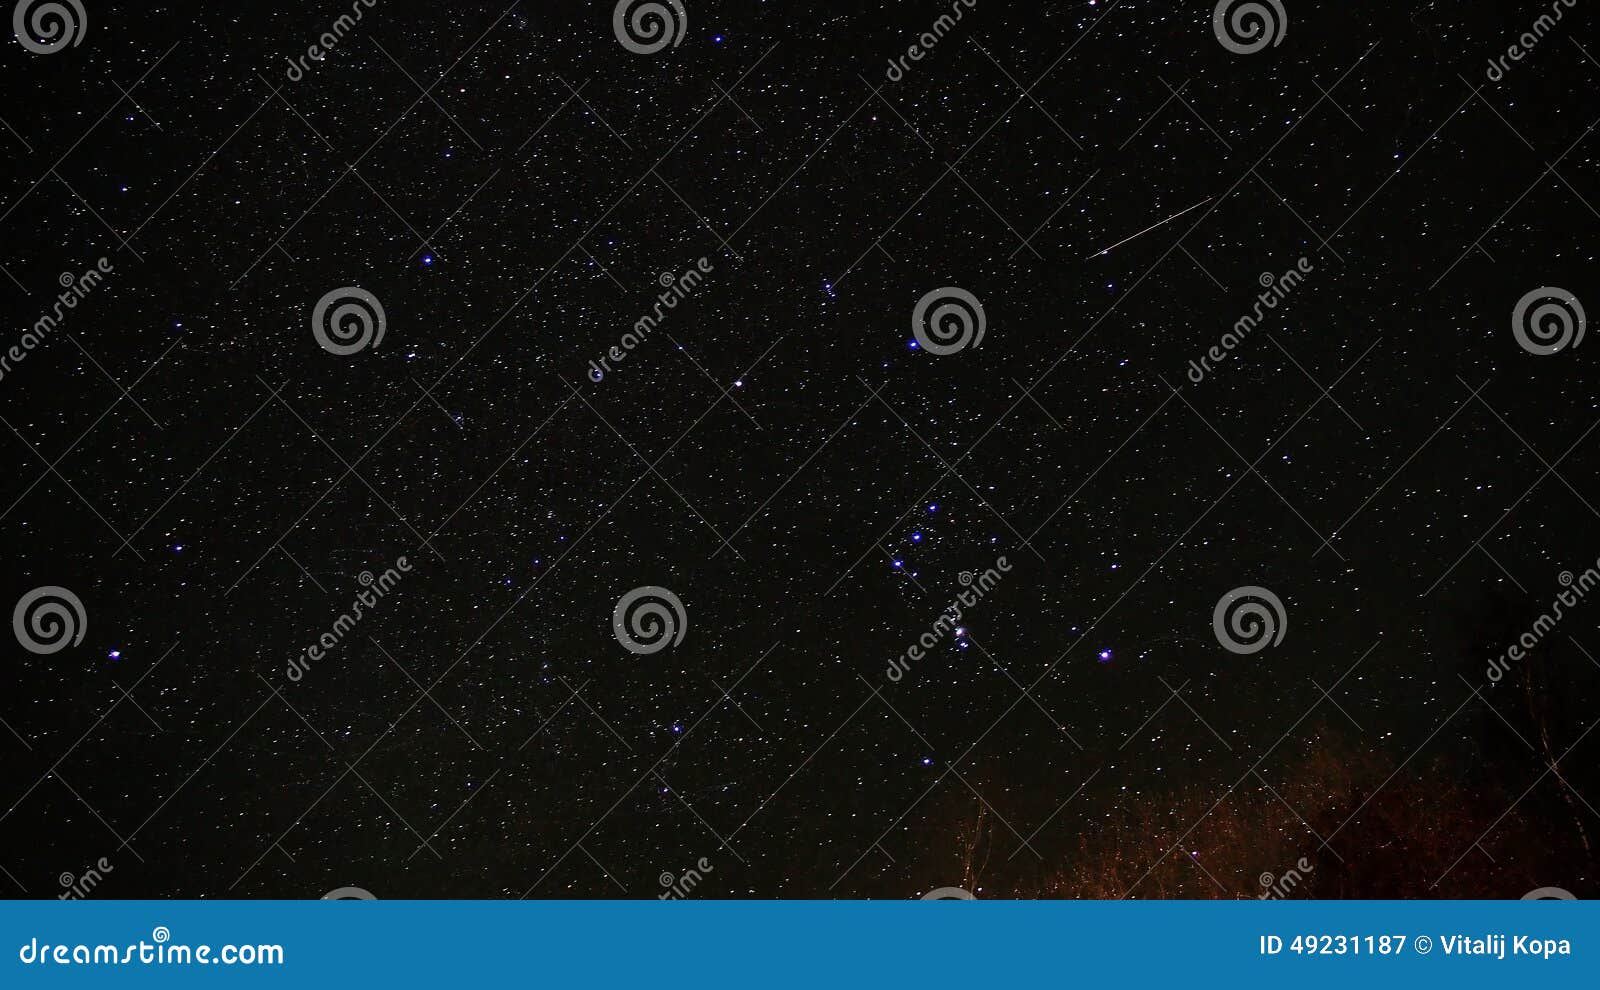 orion constellation stars in night sky